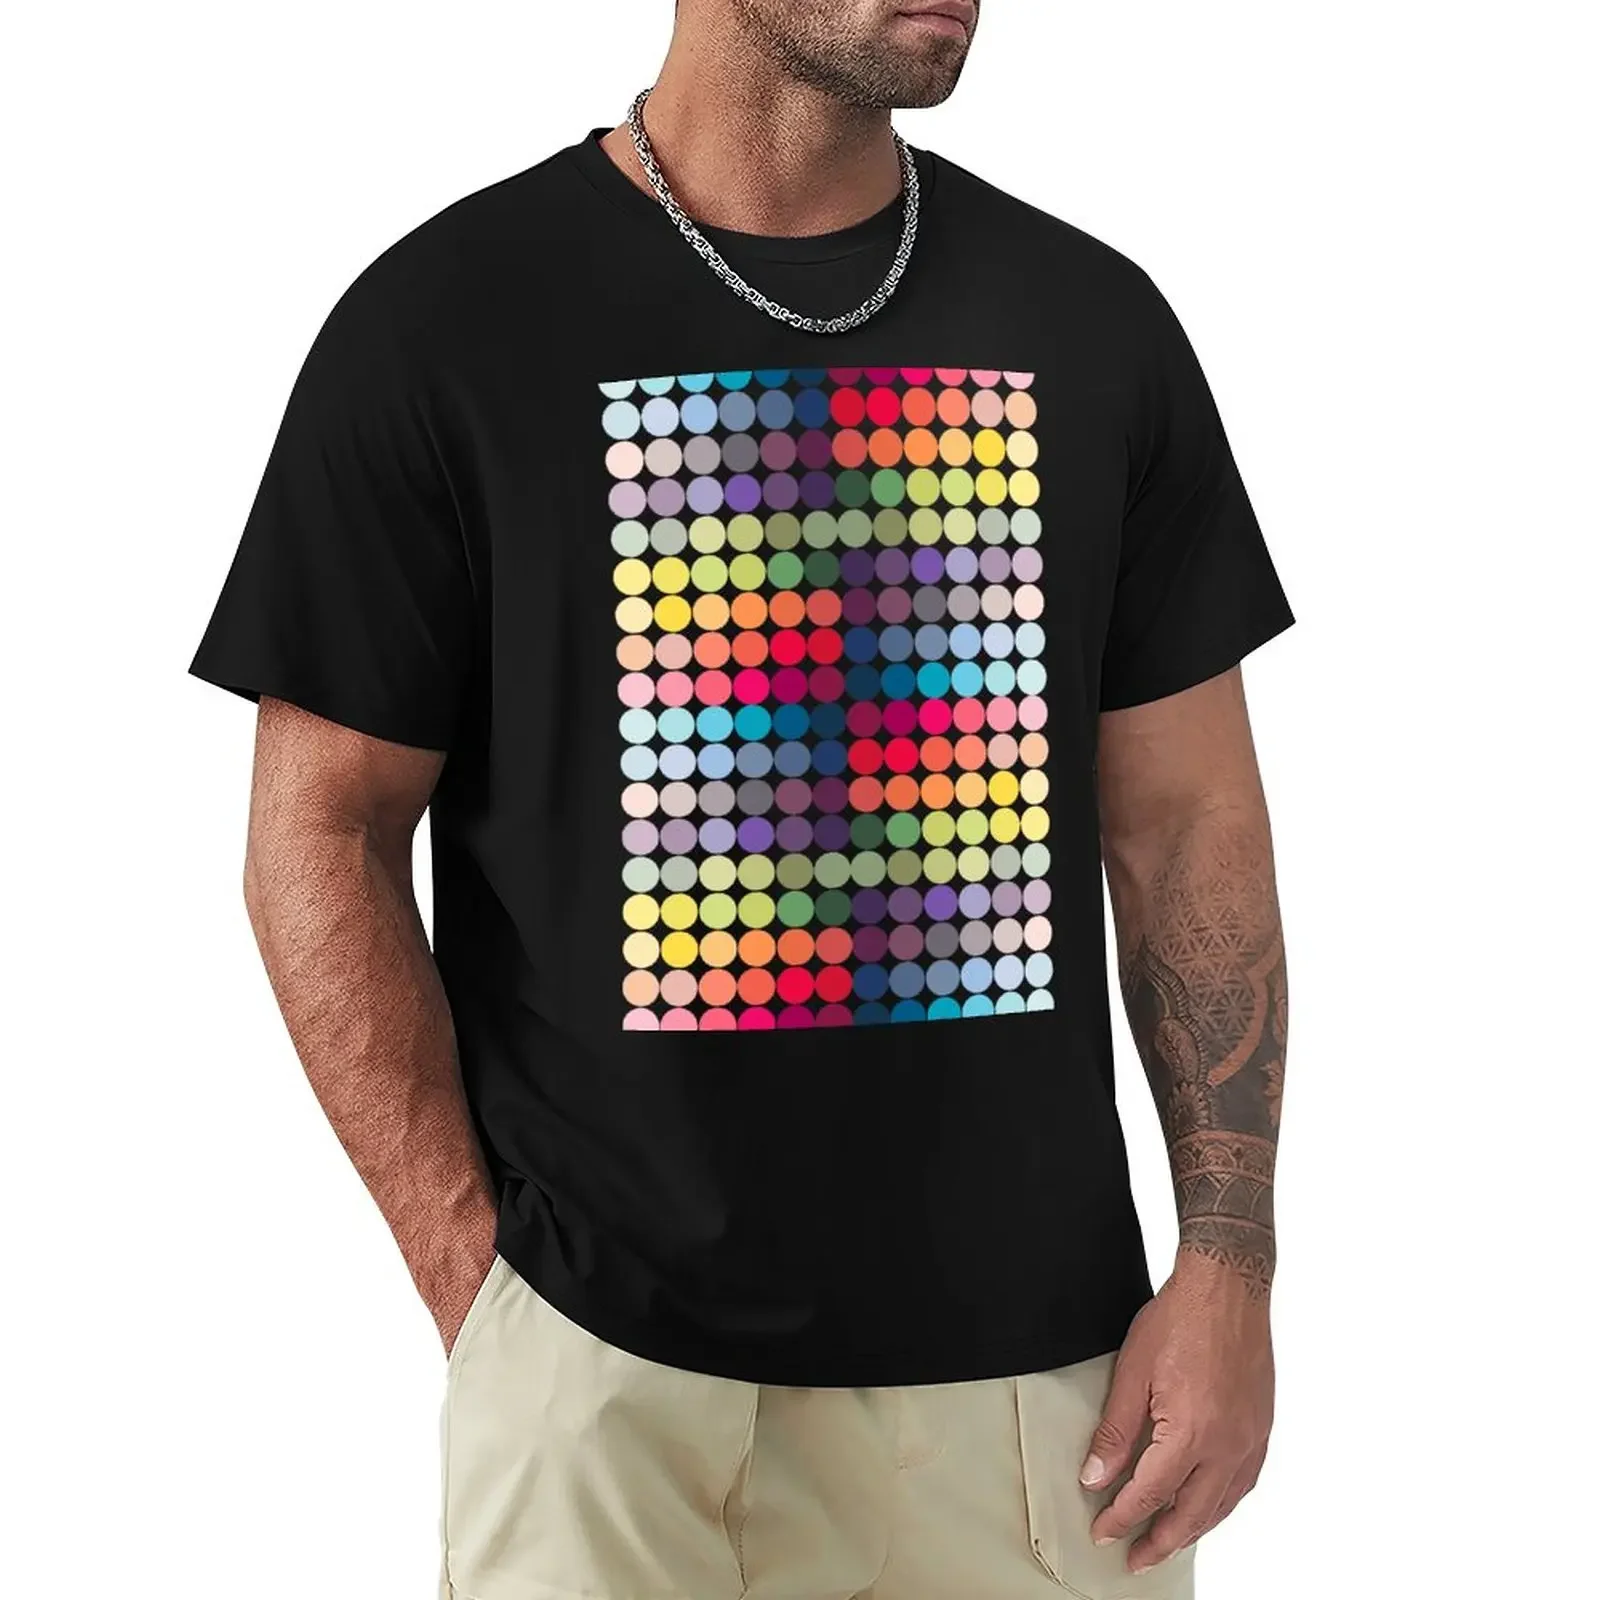 

Rainbow dots, Colour palette, polka dots T-Shirt customizeds tees cute tops Short sleeve tee men